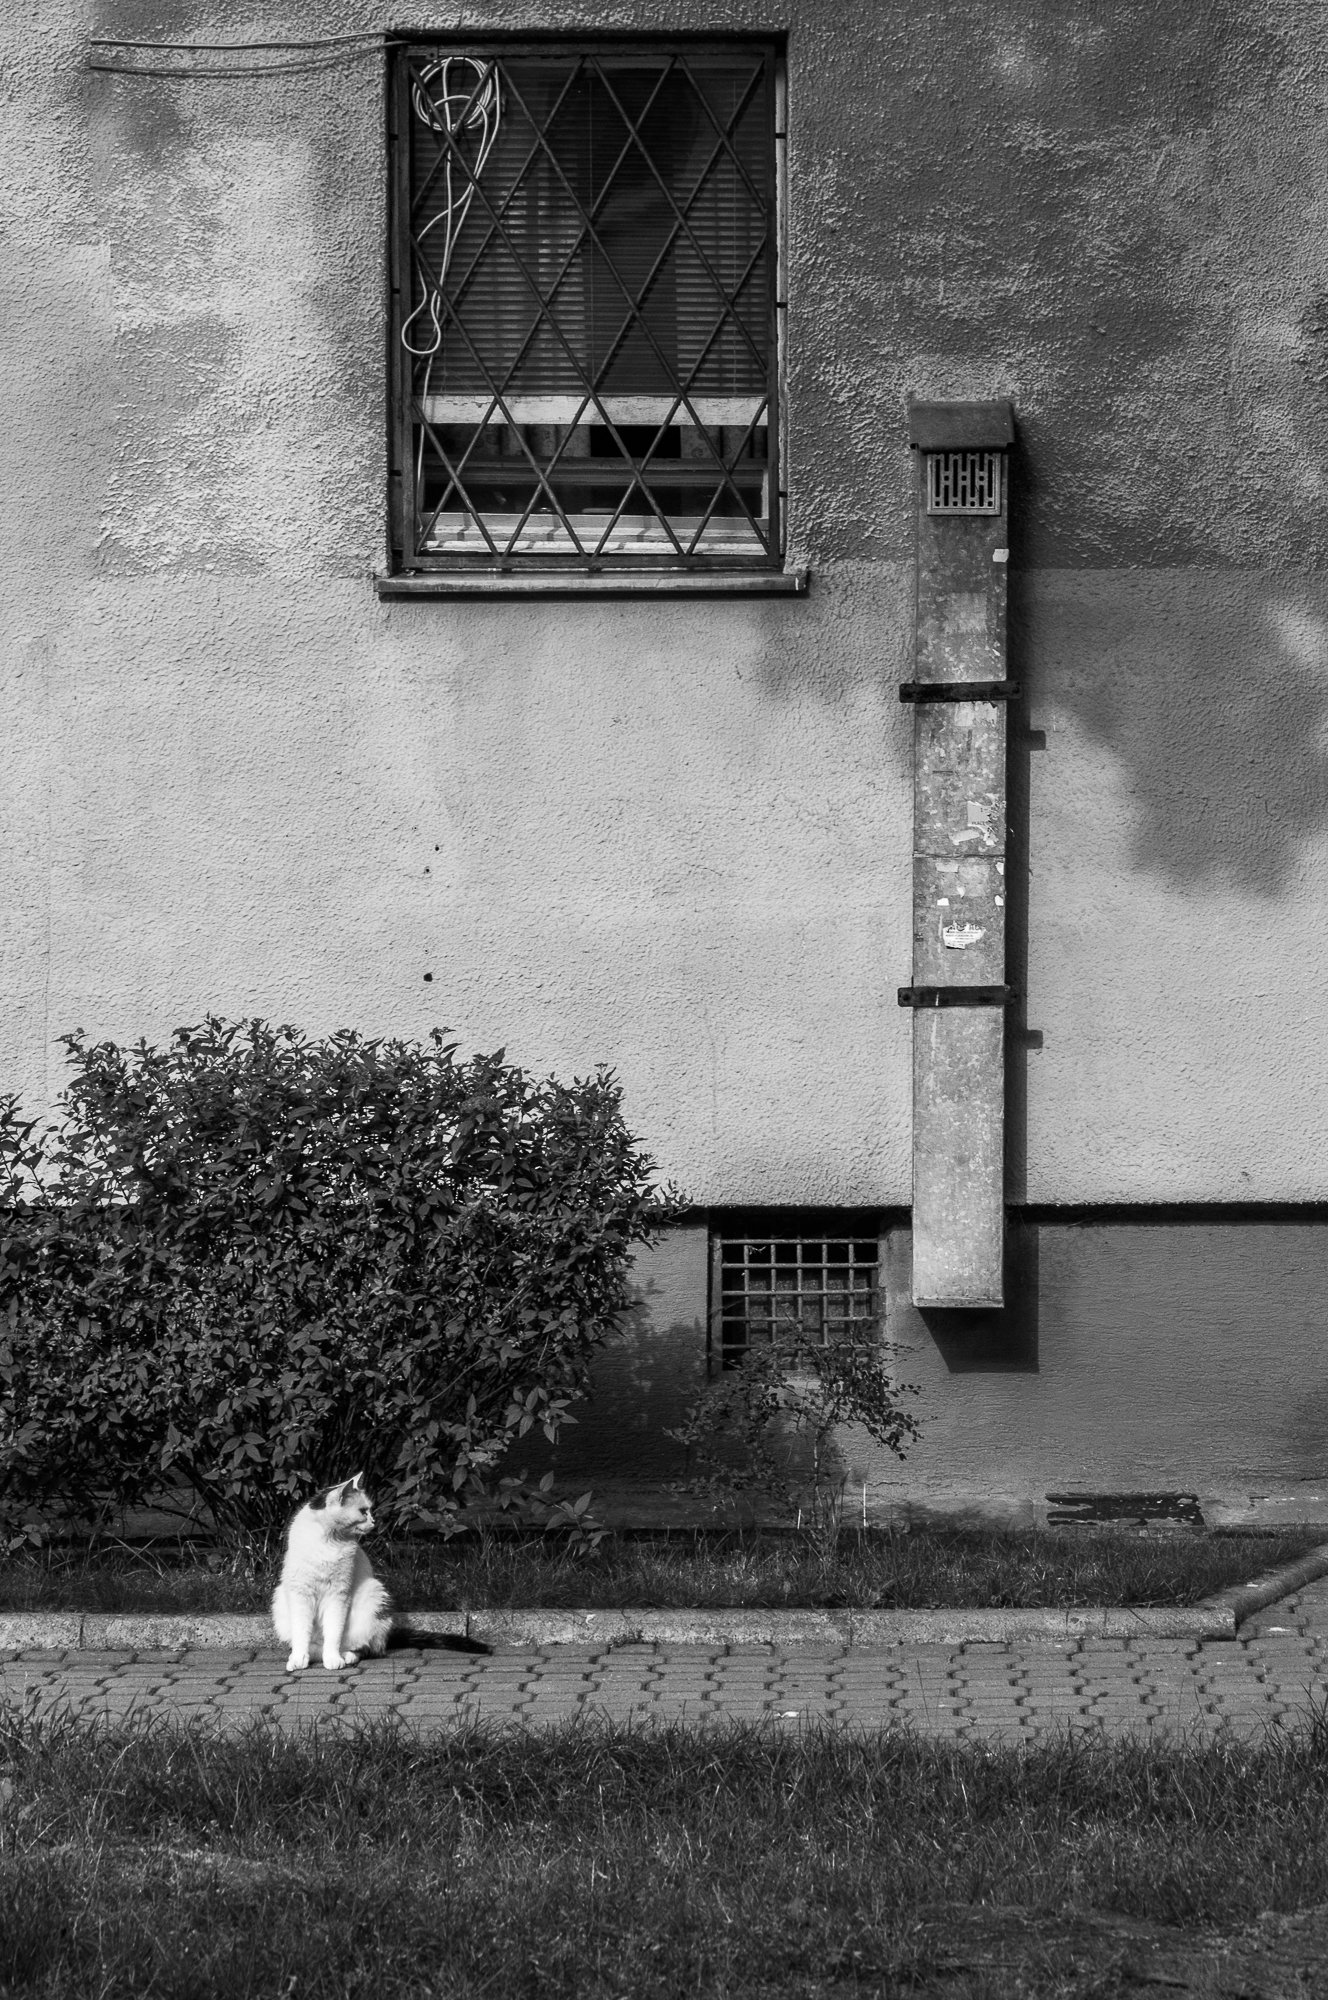 Adam Mazek Photography Warsaw (Warszawa) 2017. Post: "The curiosity of the world." Minimalism. The cat.